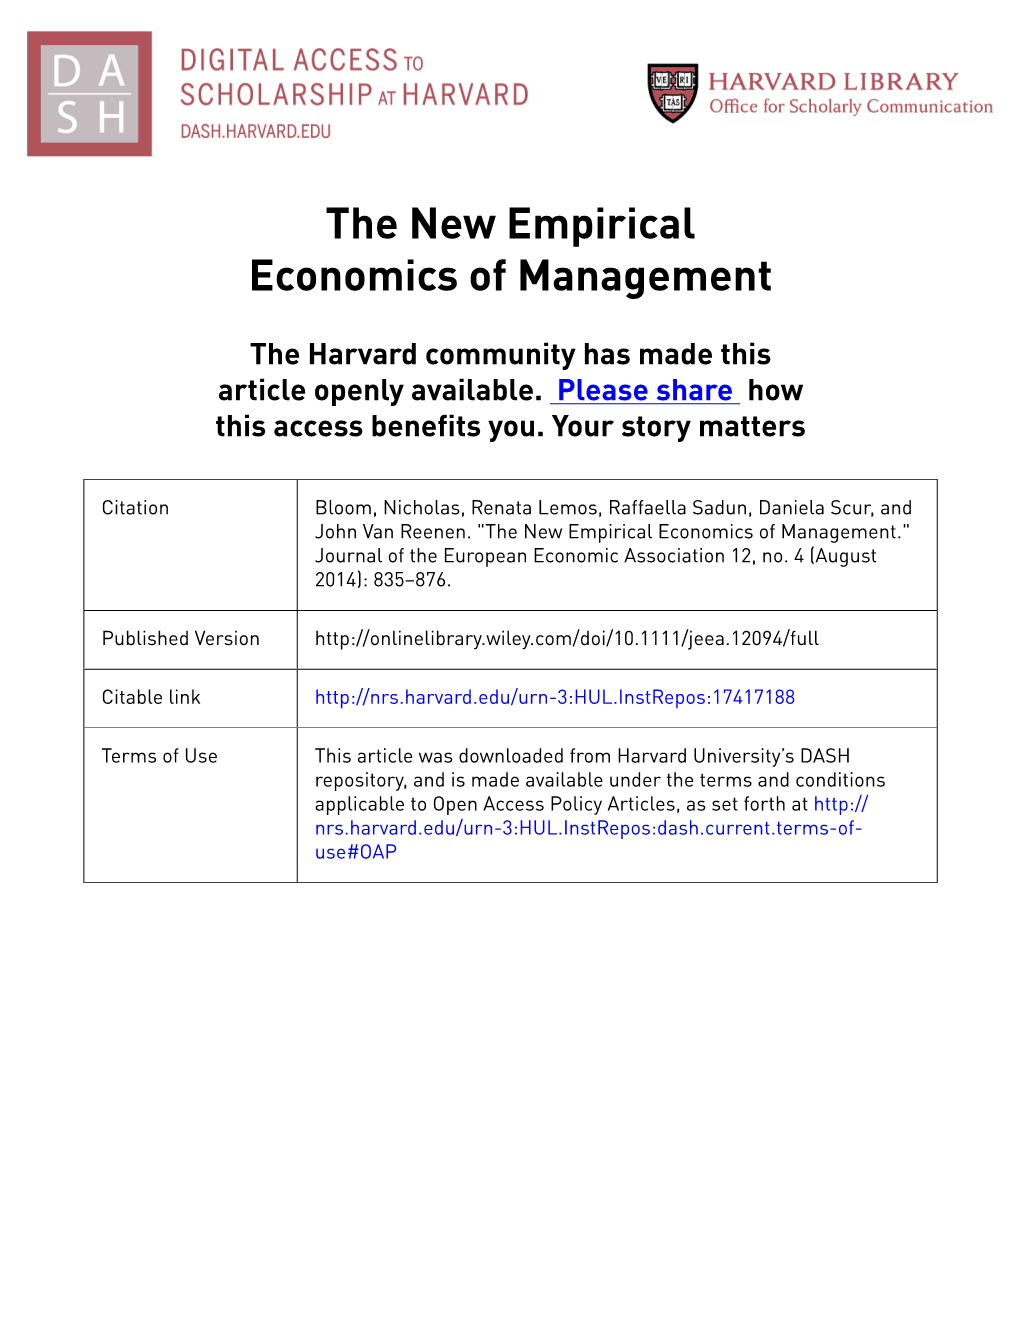 The New Empirical Economics of Management